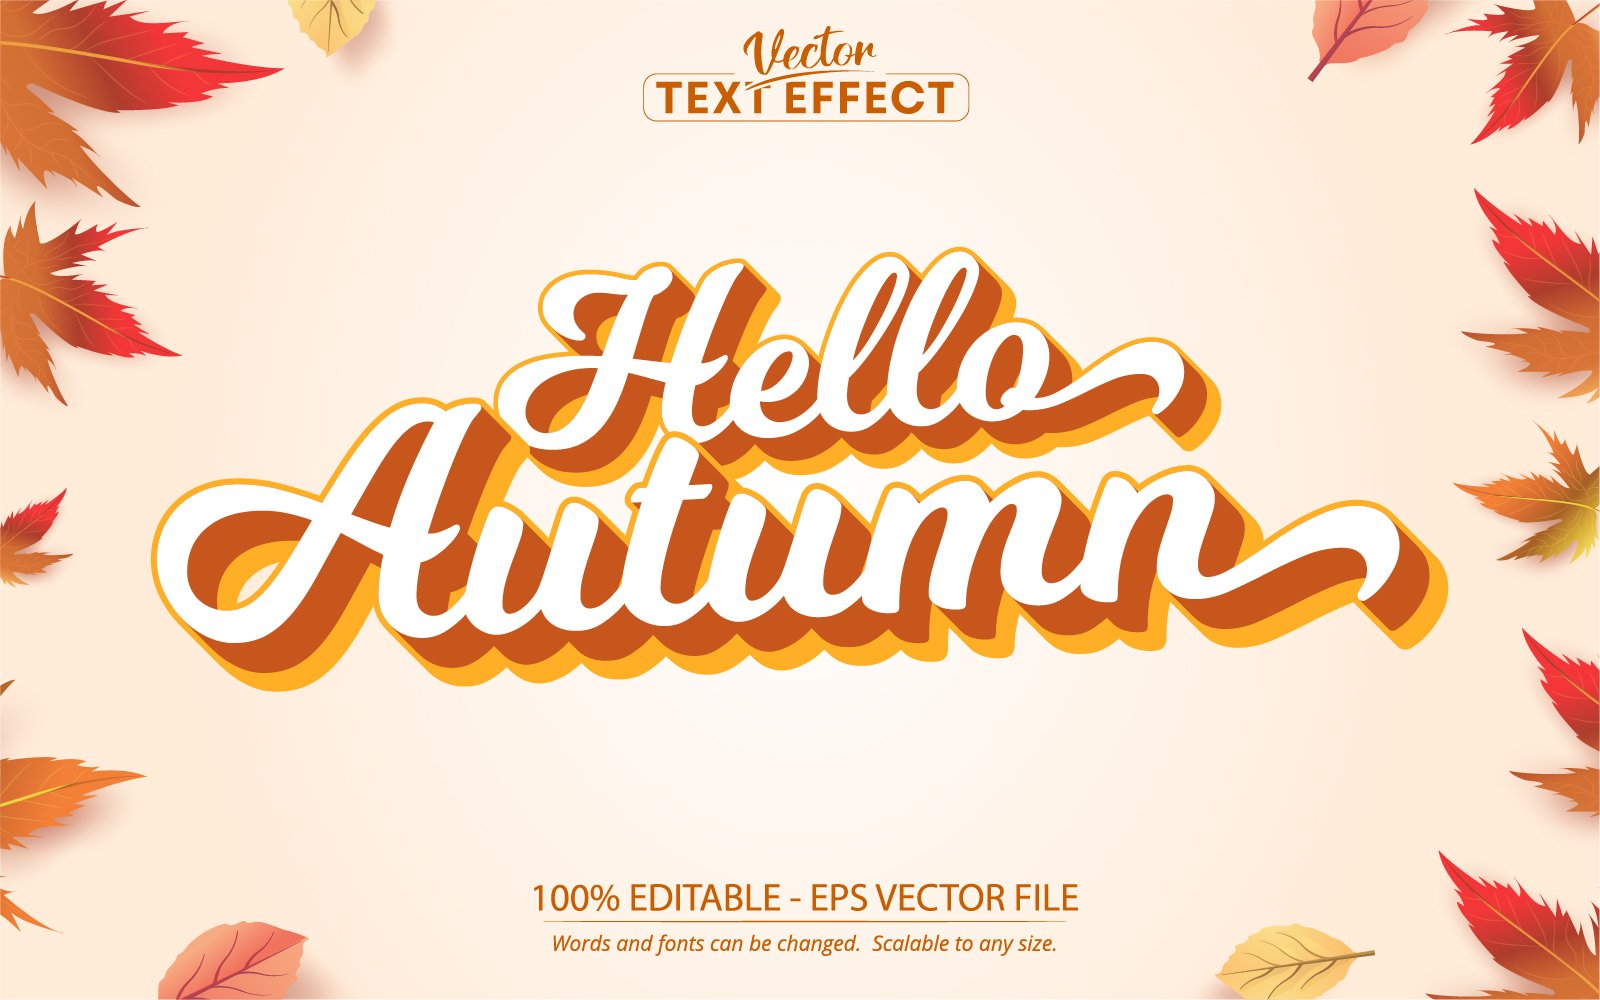 Hello Autumn - Editable Text Effect, Minimal And Cartoon Text Style, Graphics Illustration